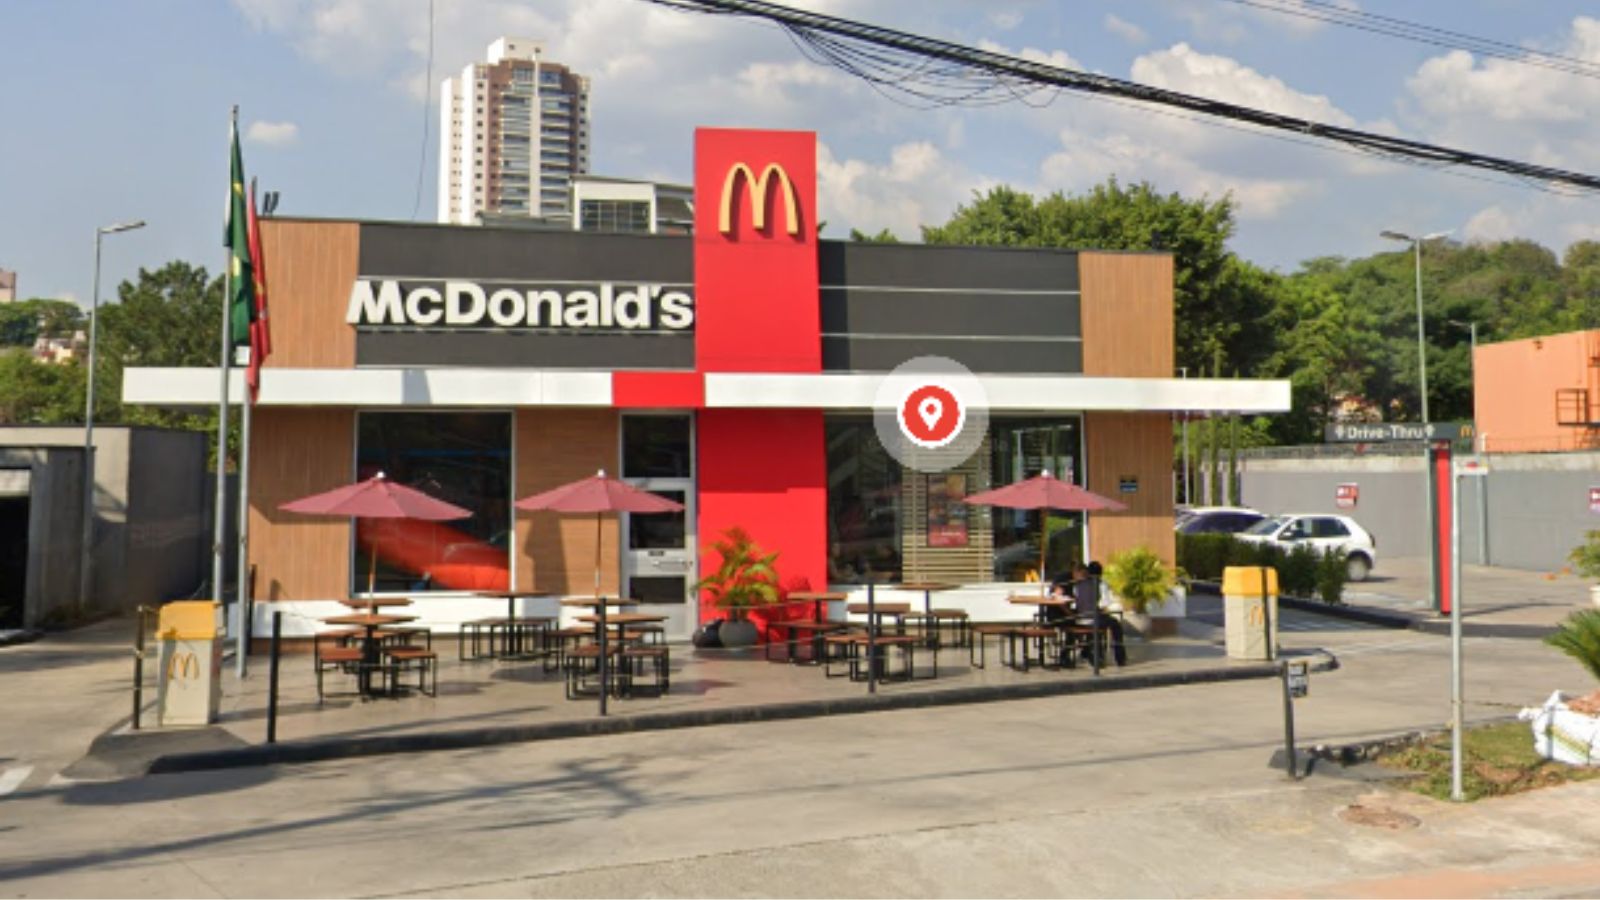 McDonald's em Jundiaí